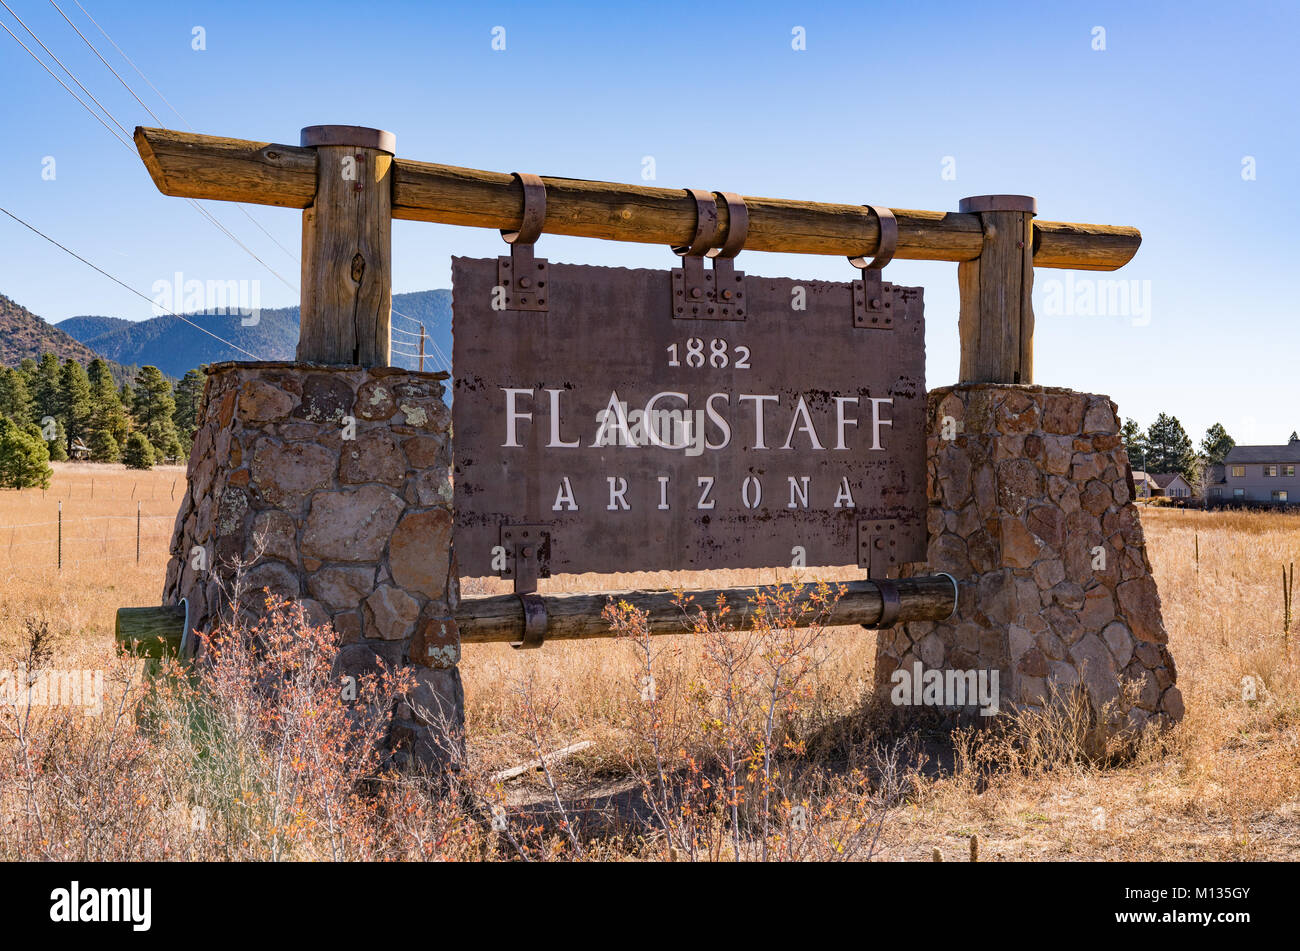 FLAGSTAFF, AZ - OCTOBER 24, 2017: Welcome sign on the outskirts of Flagstaff, Arizona Stock Photo